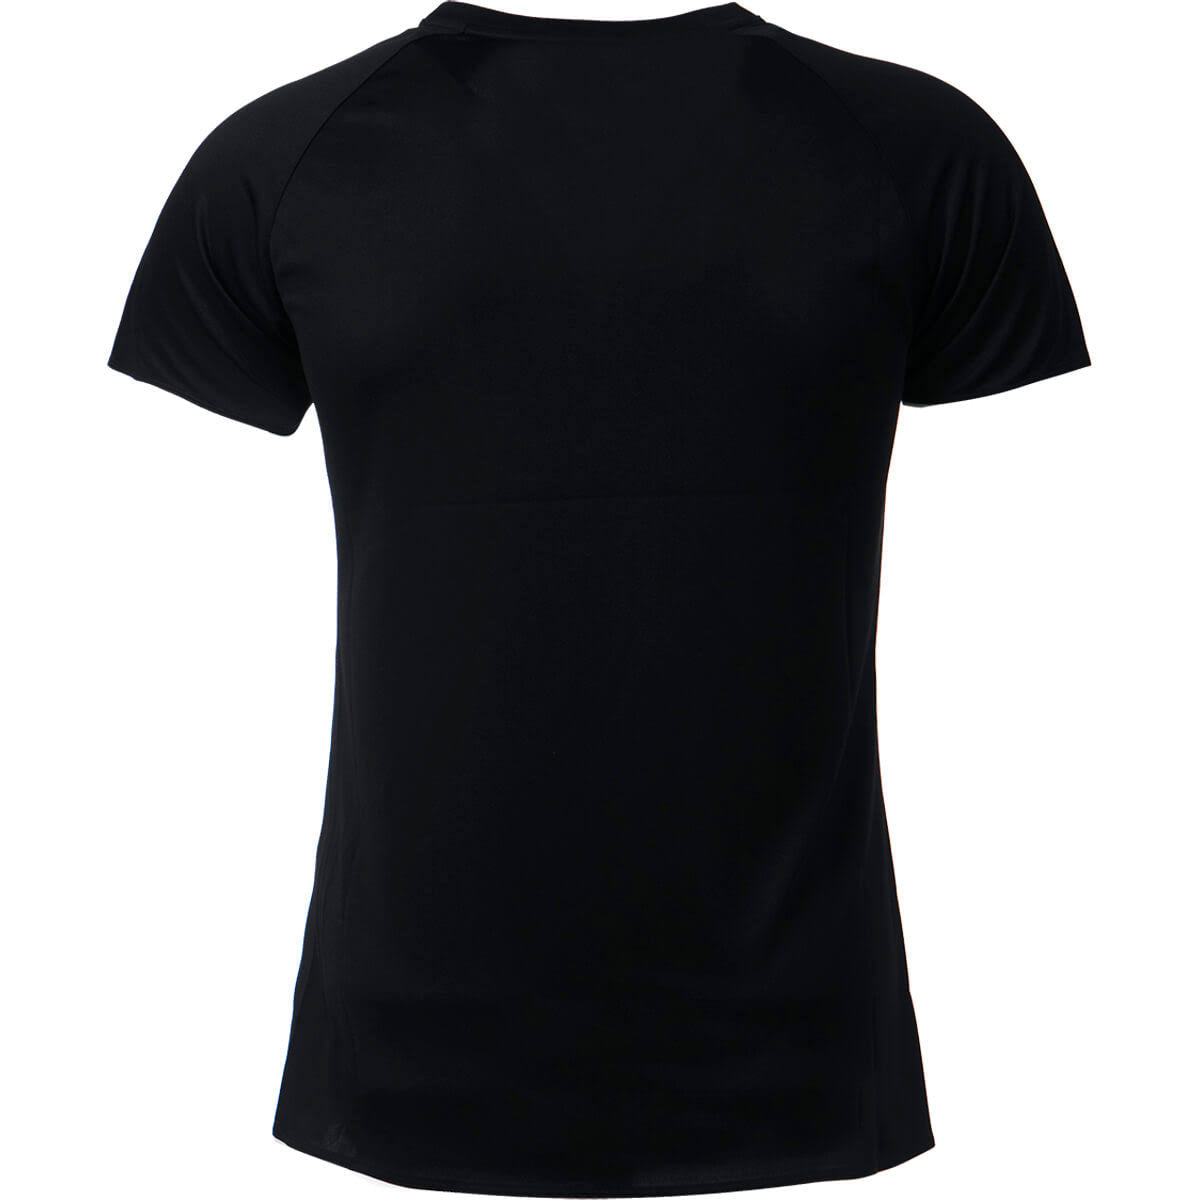 Mobile Women's T-Shirt (Black)